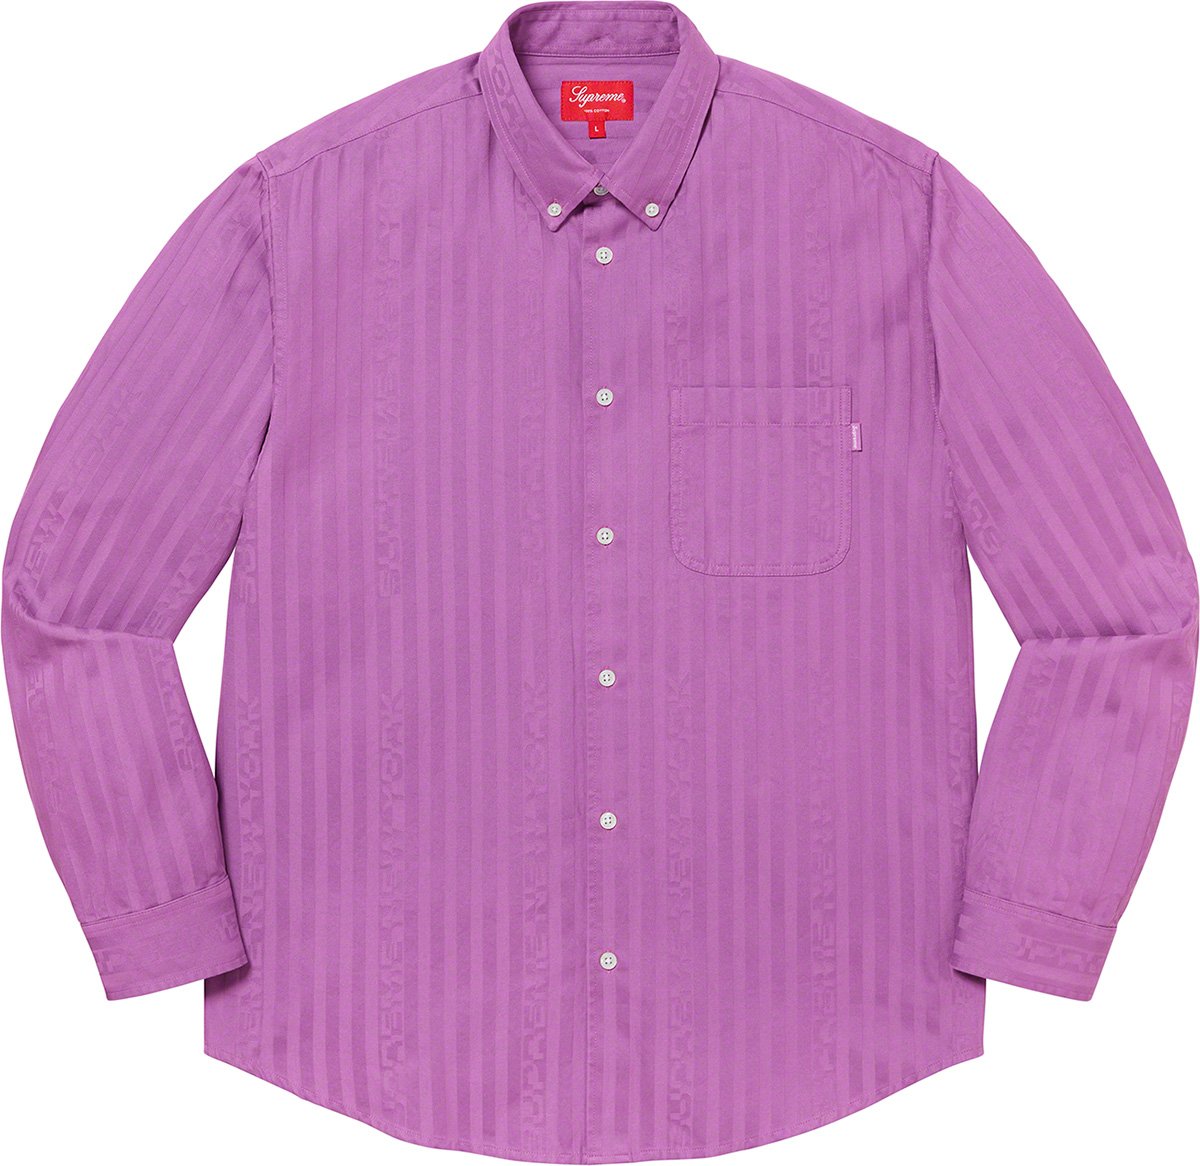 Jacquard Stripe Twill Shirt - fall winter 2020 - Supreme